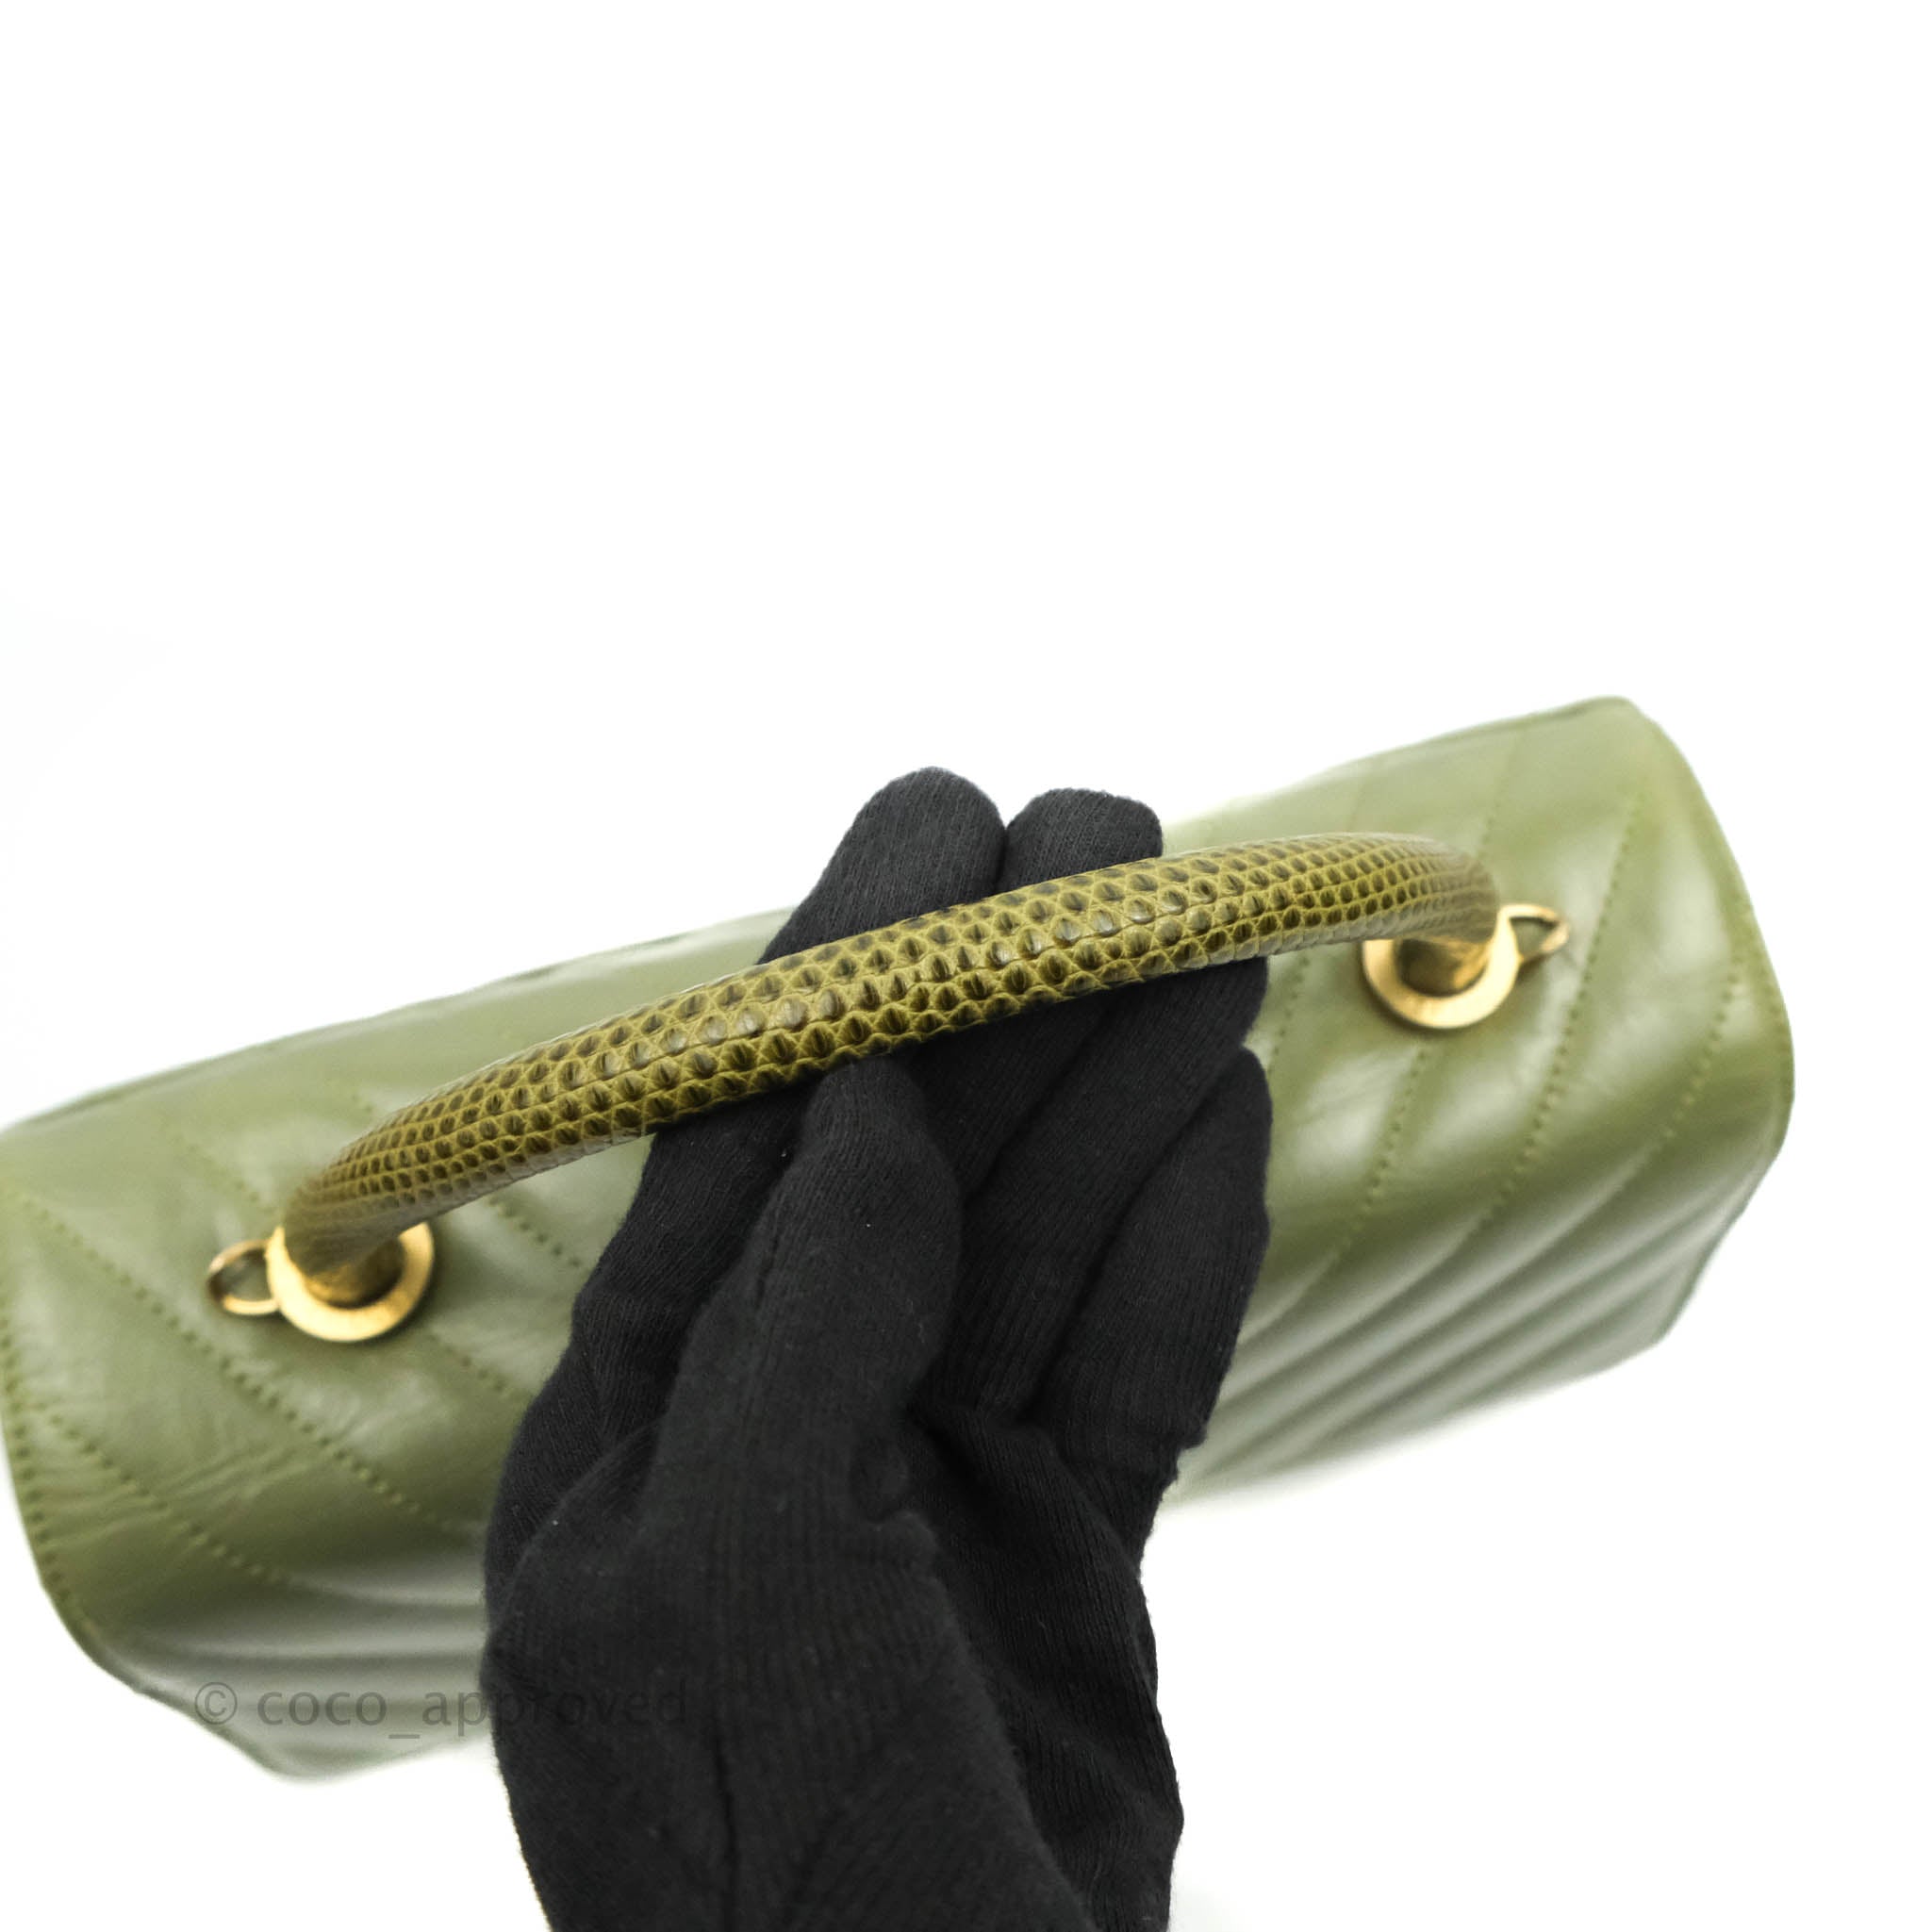 Chanel Medium Statement Chevron Flap Bag Navy Calfskin Gold Hardware